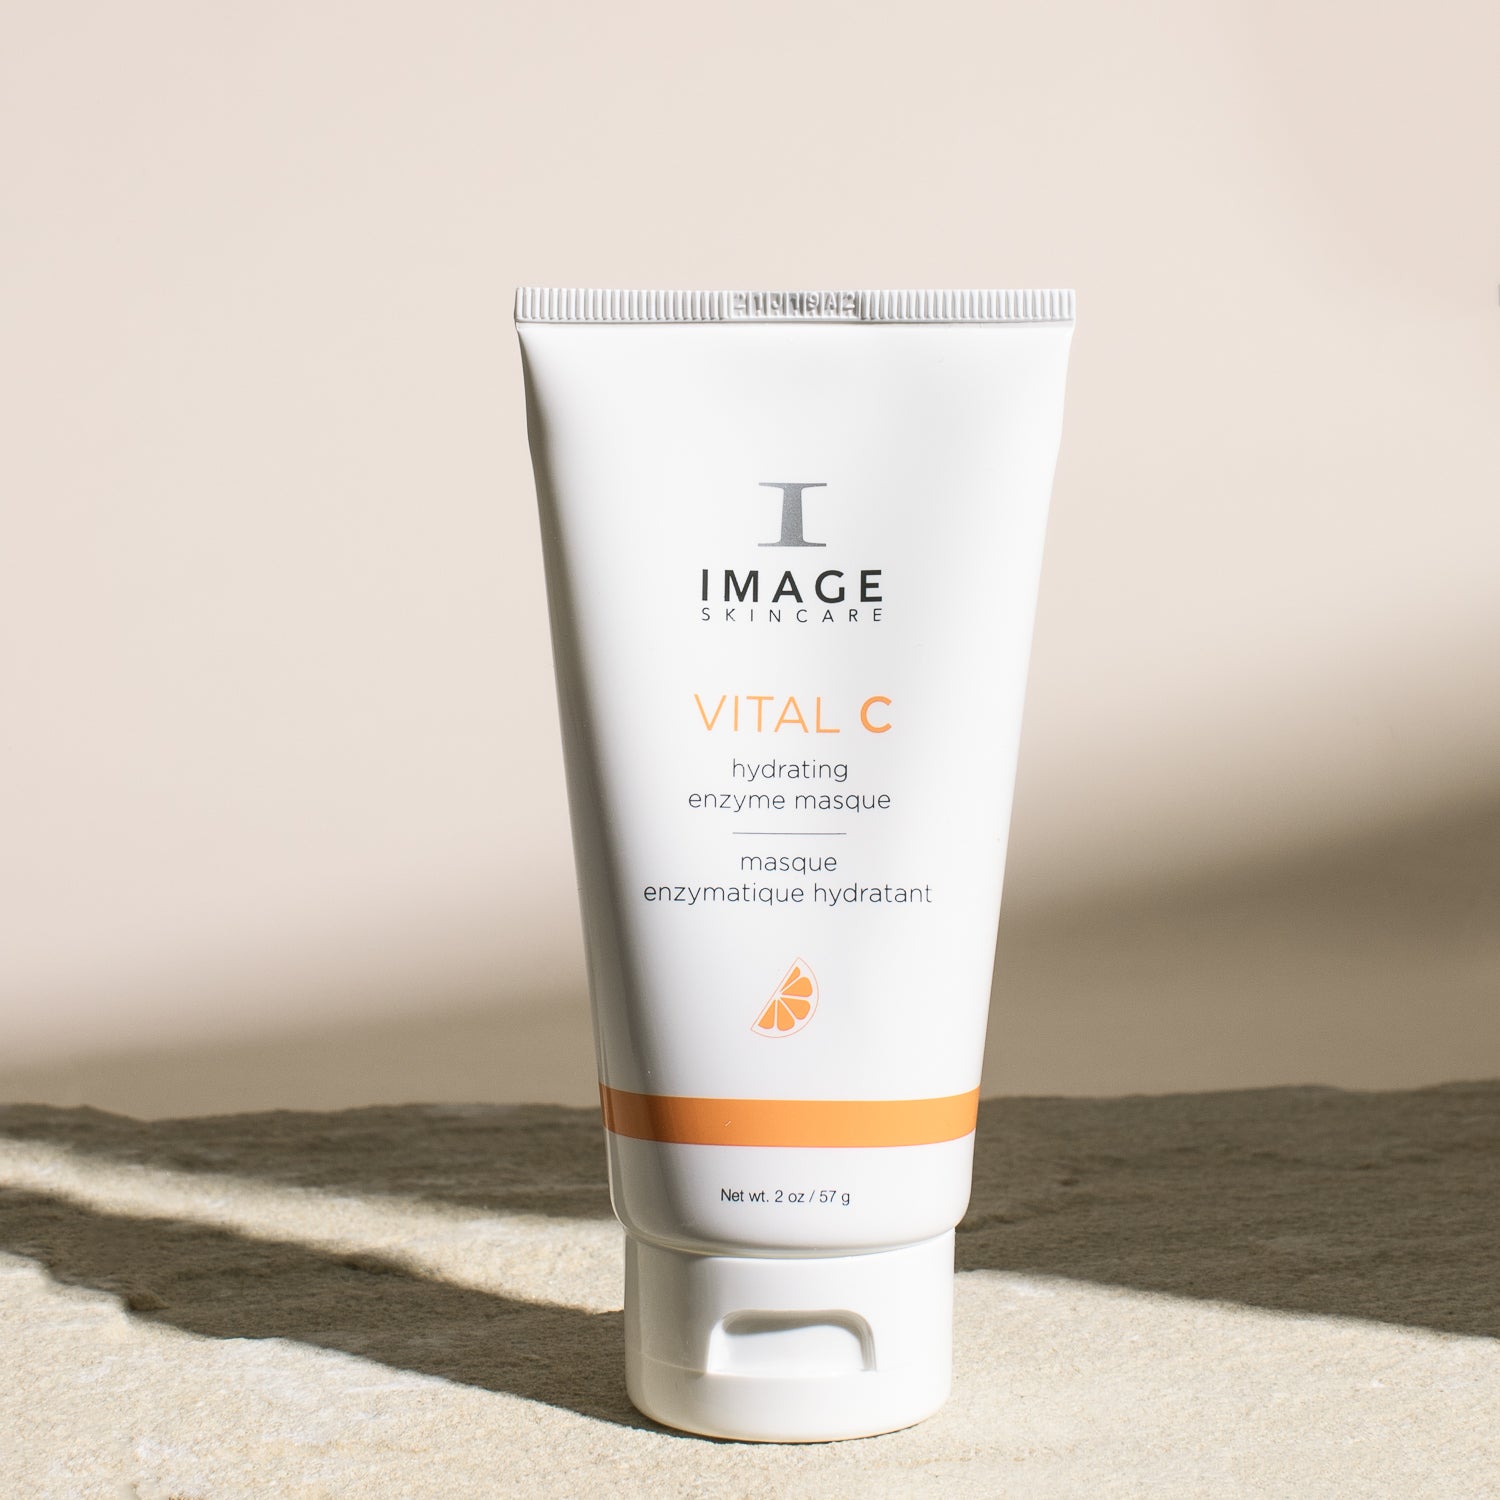 VITAL C Hydrating Enzyme Masque 2oz Image Skincare